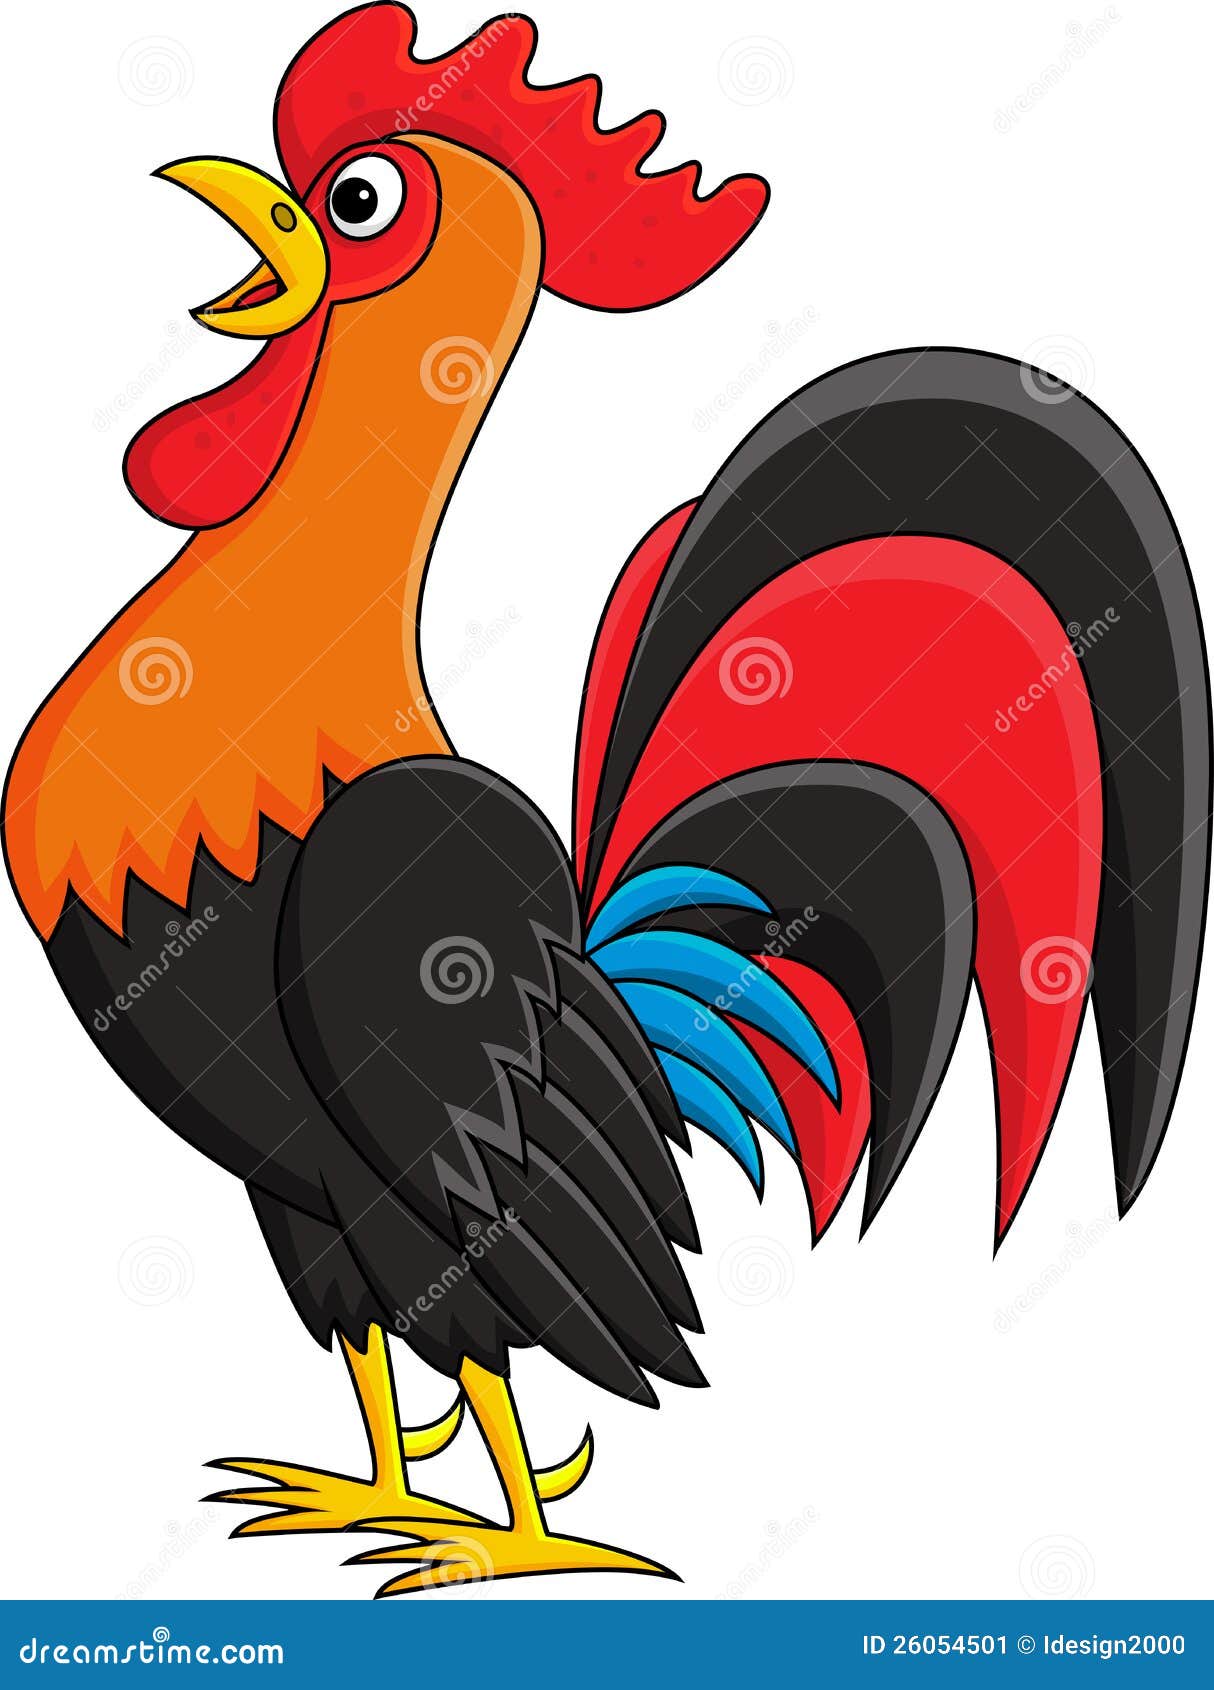 Rooster cartoon stock illustration. Illustration of cartoon - 26054501